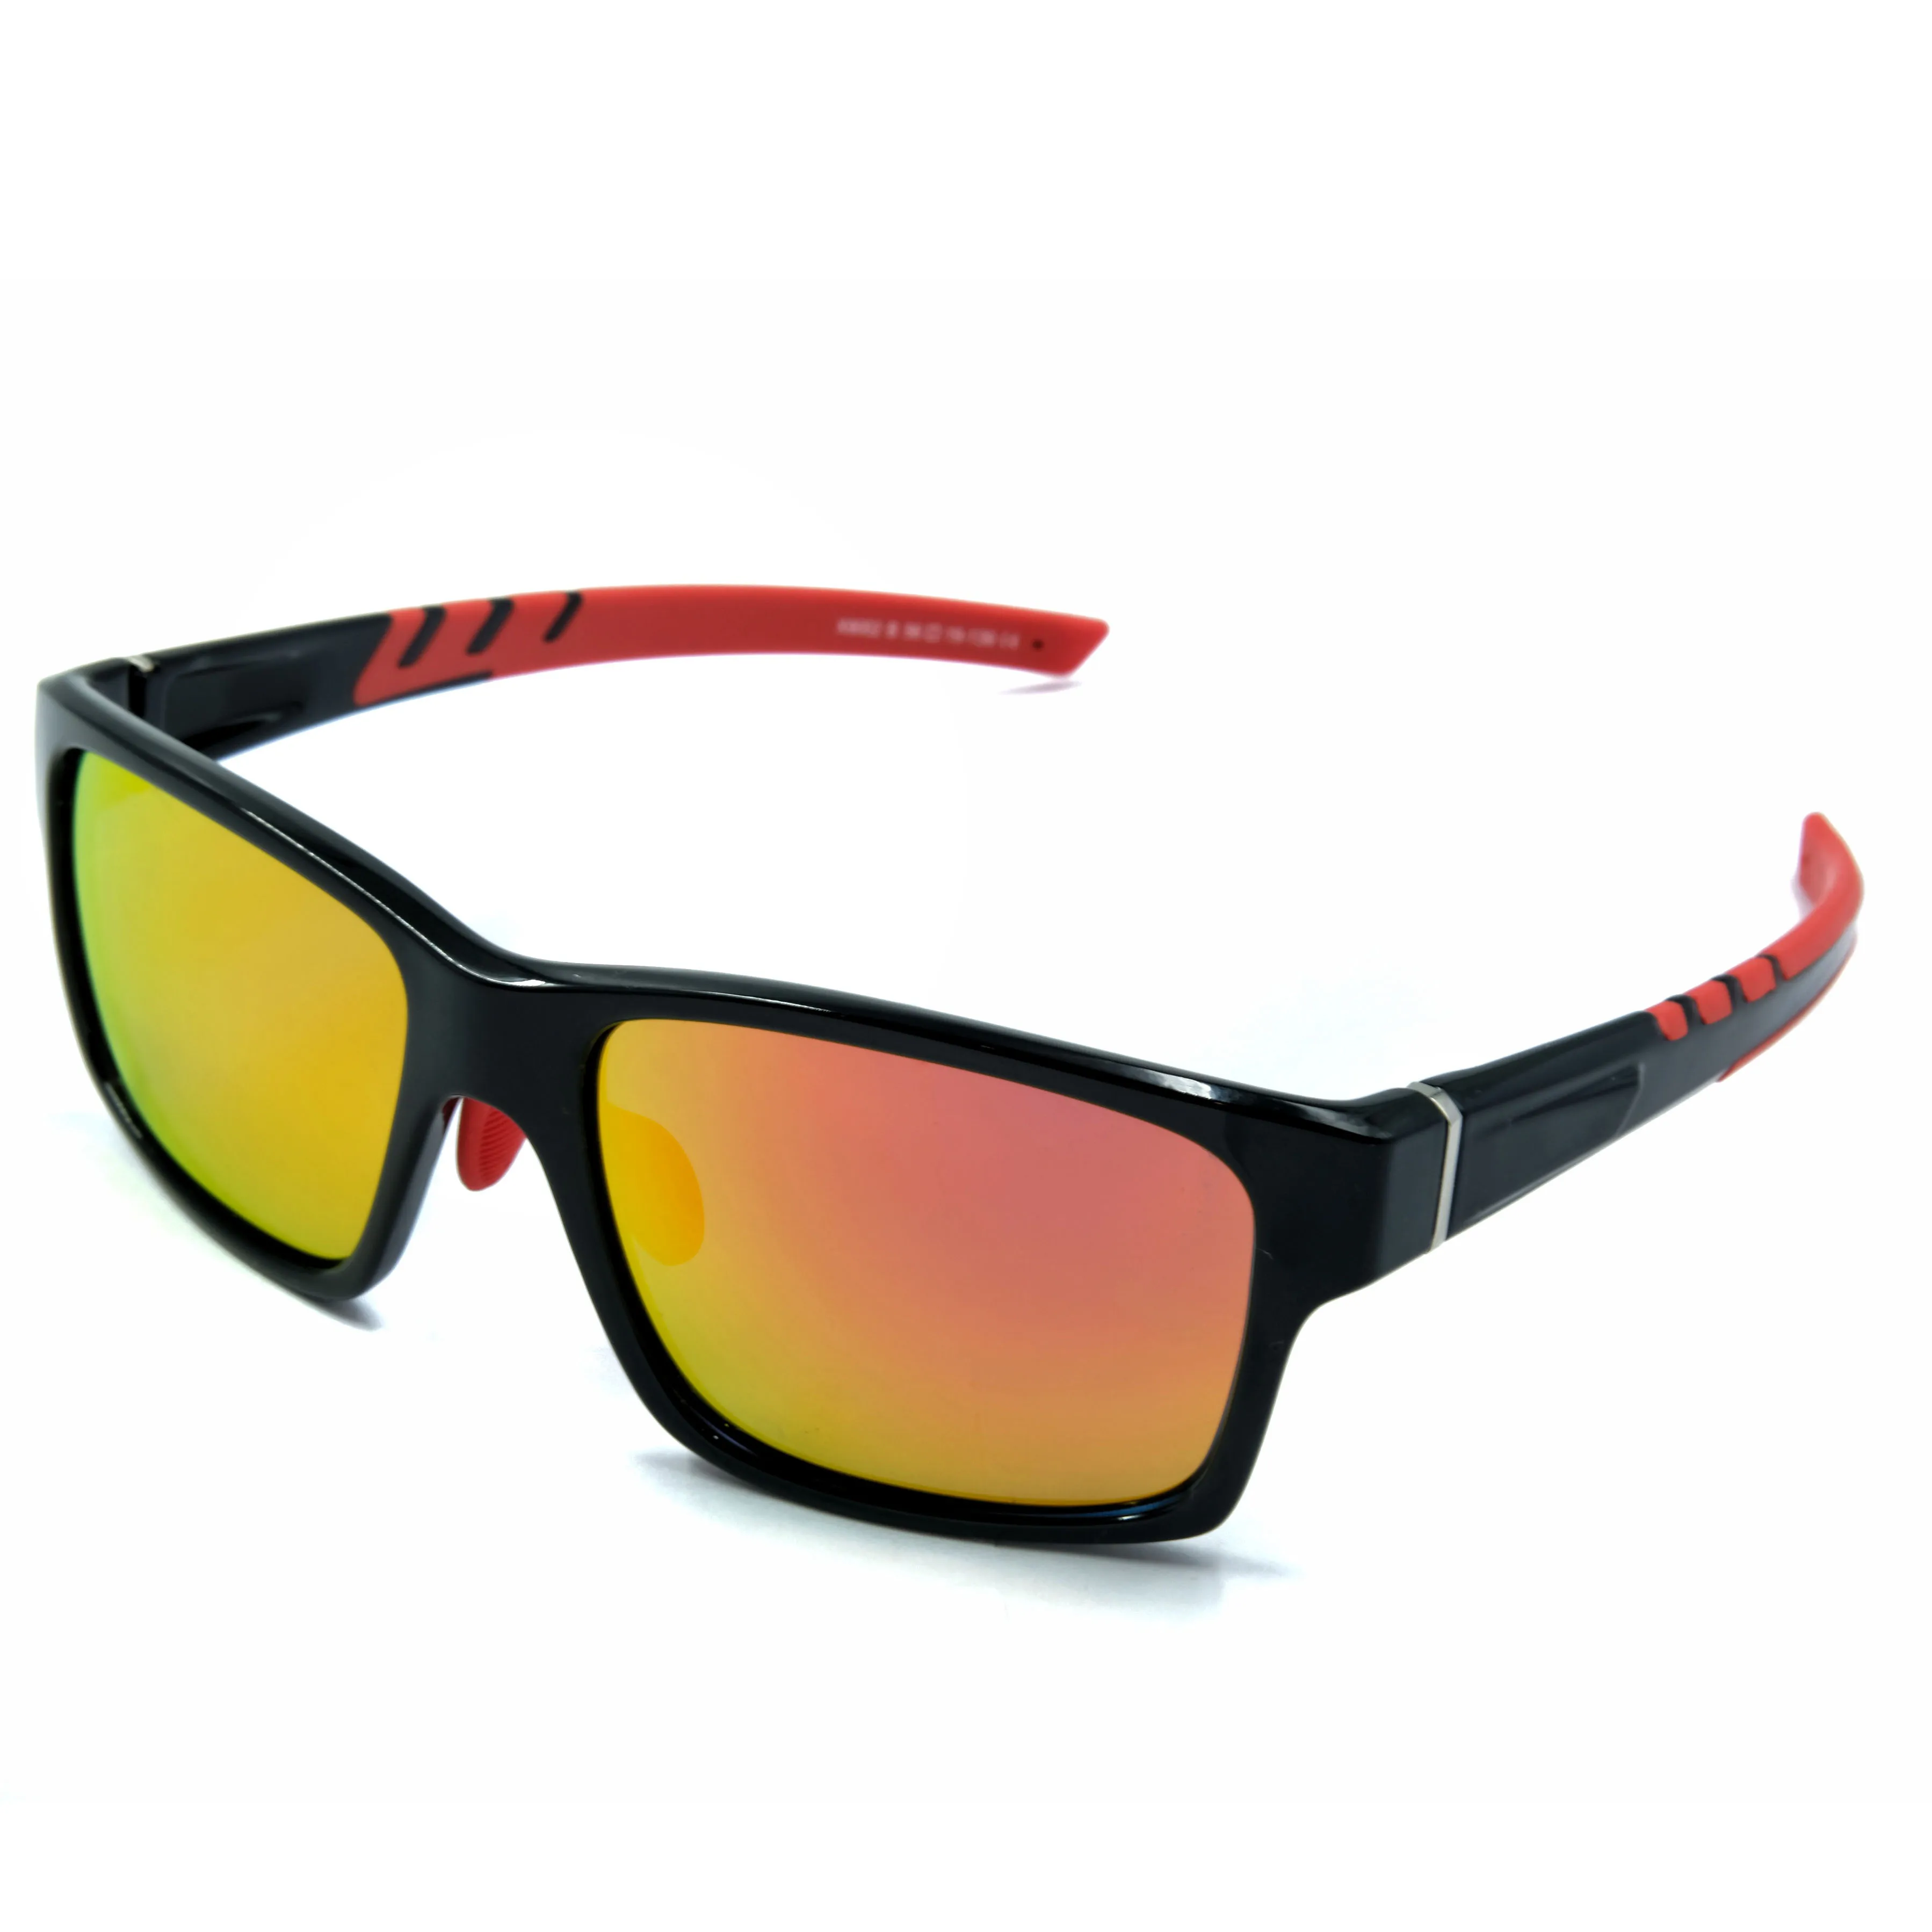 

TR90 Red Sun glasses river contact lenses polarized ray bans men sports sunglasses 2021 women shades fishing riding Hiking